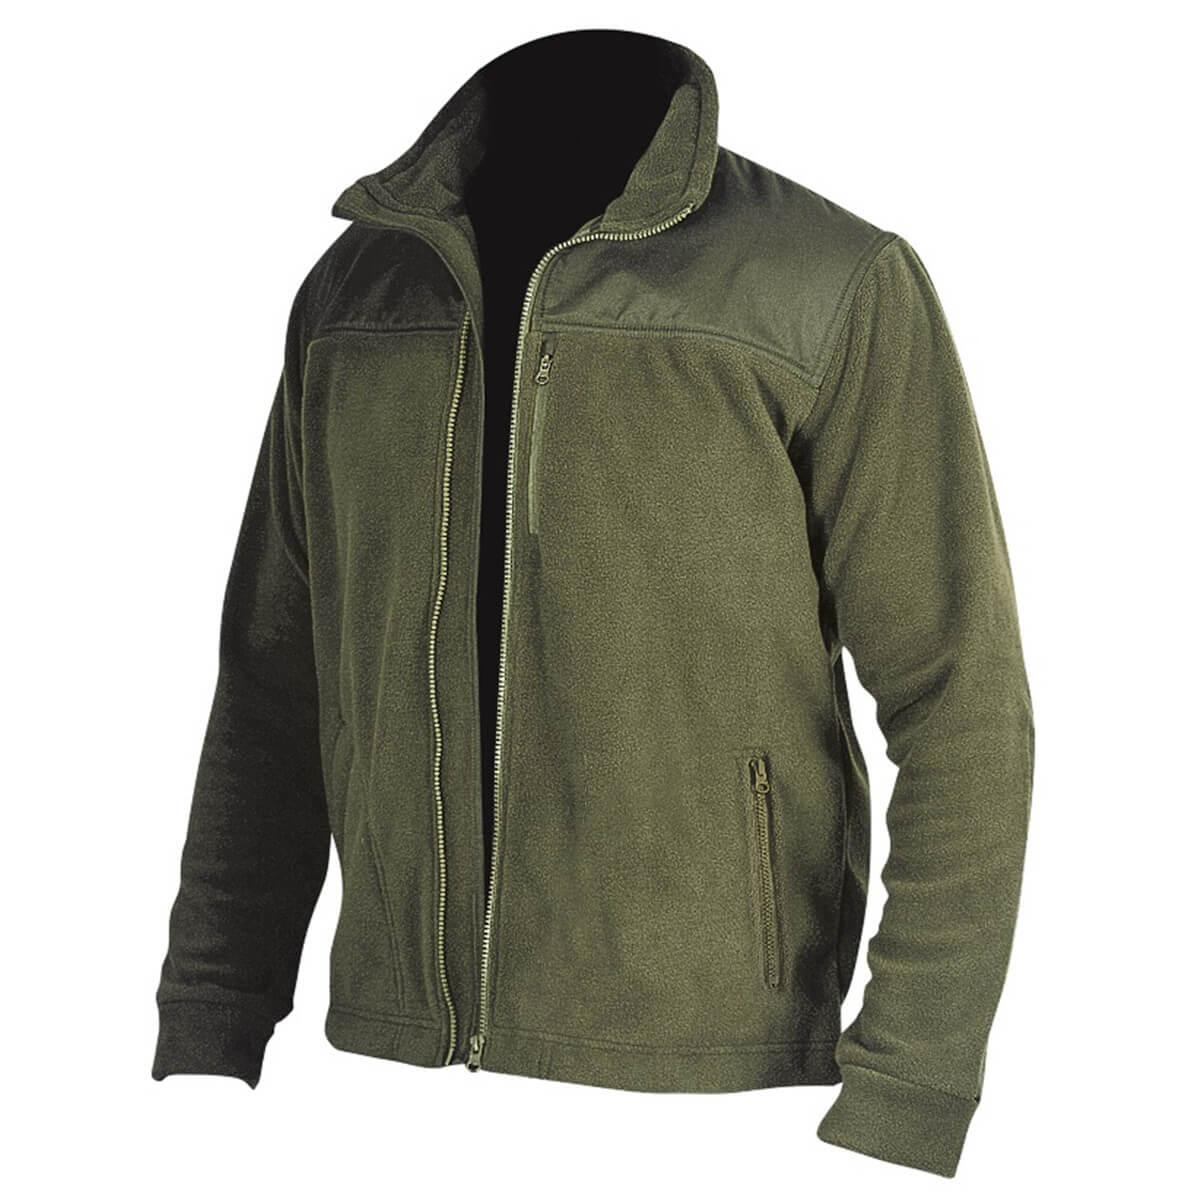 Fleece mikina s vložkami,280 g/m2, vel. XL,barva zelená army DEDRA BH6PA-XL